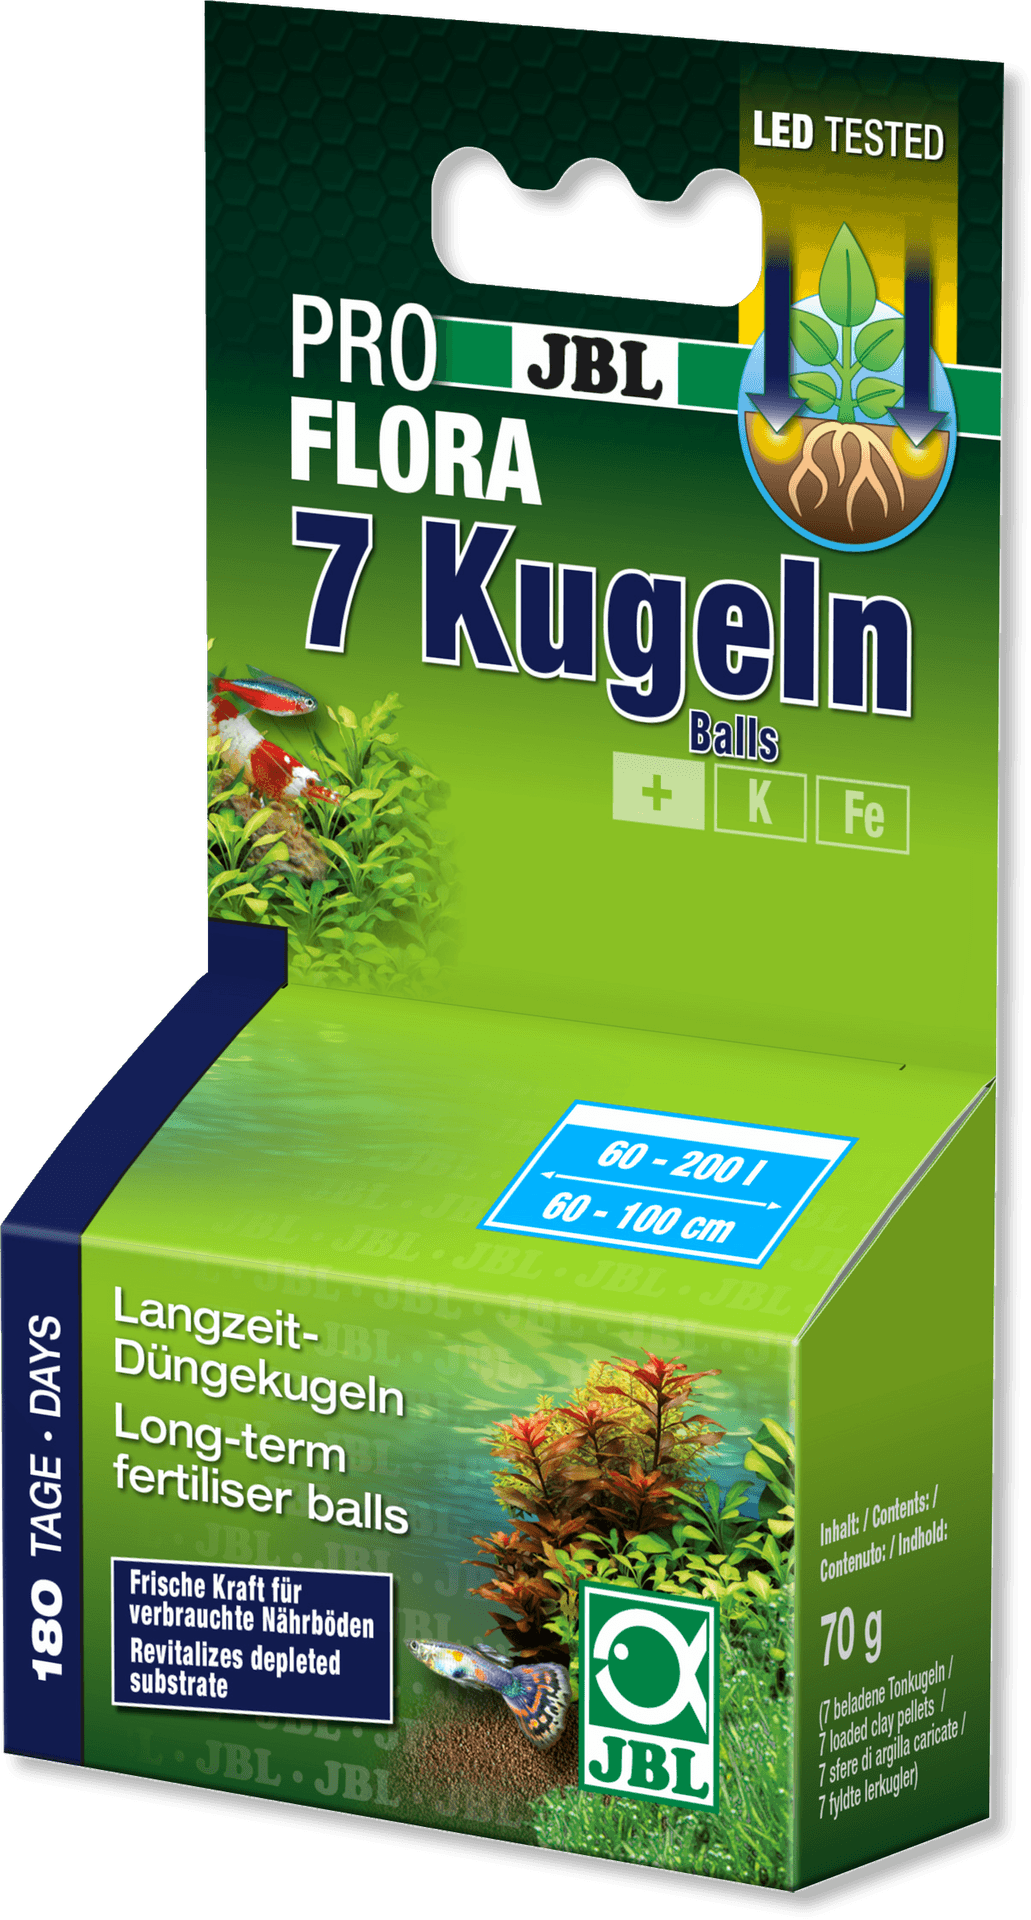 J B L Pro Flora7 Kugeln Fertilizer Balls Packaging PNG